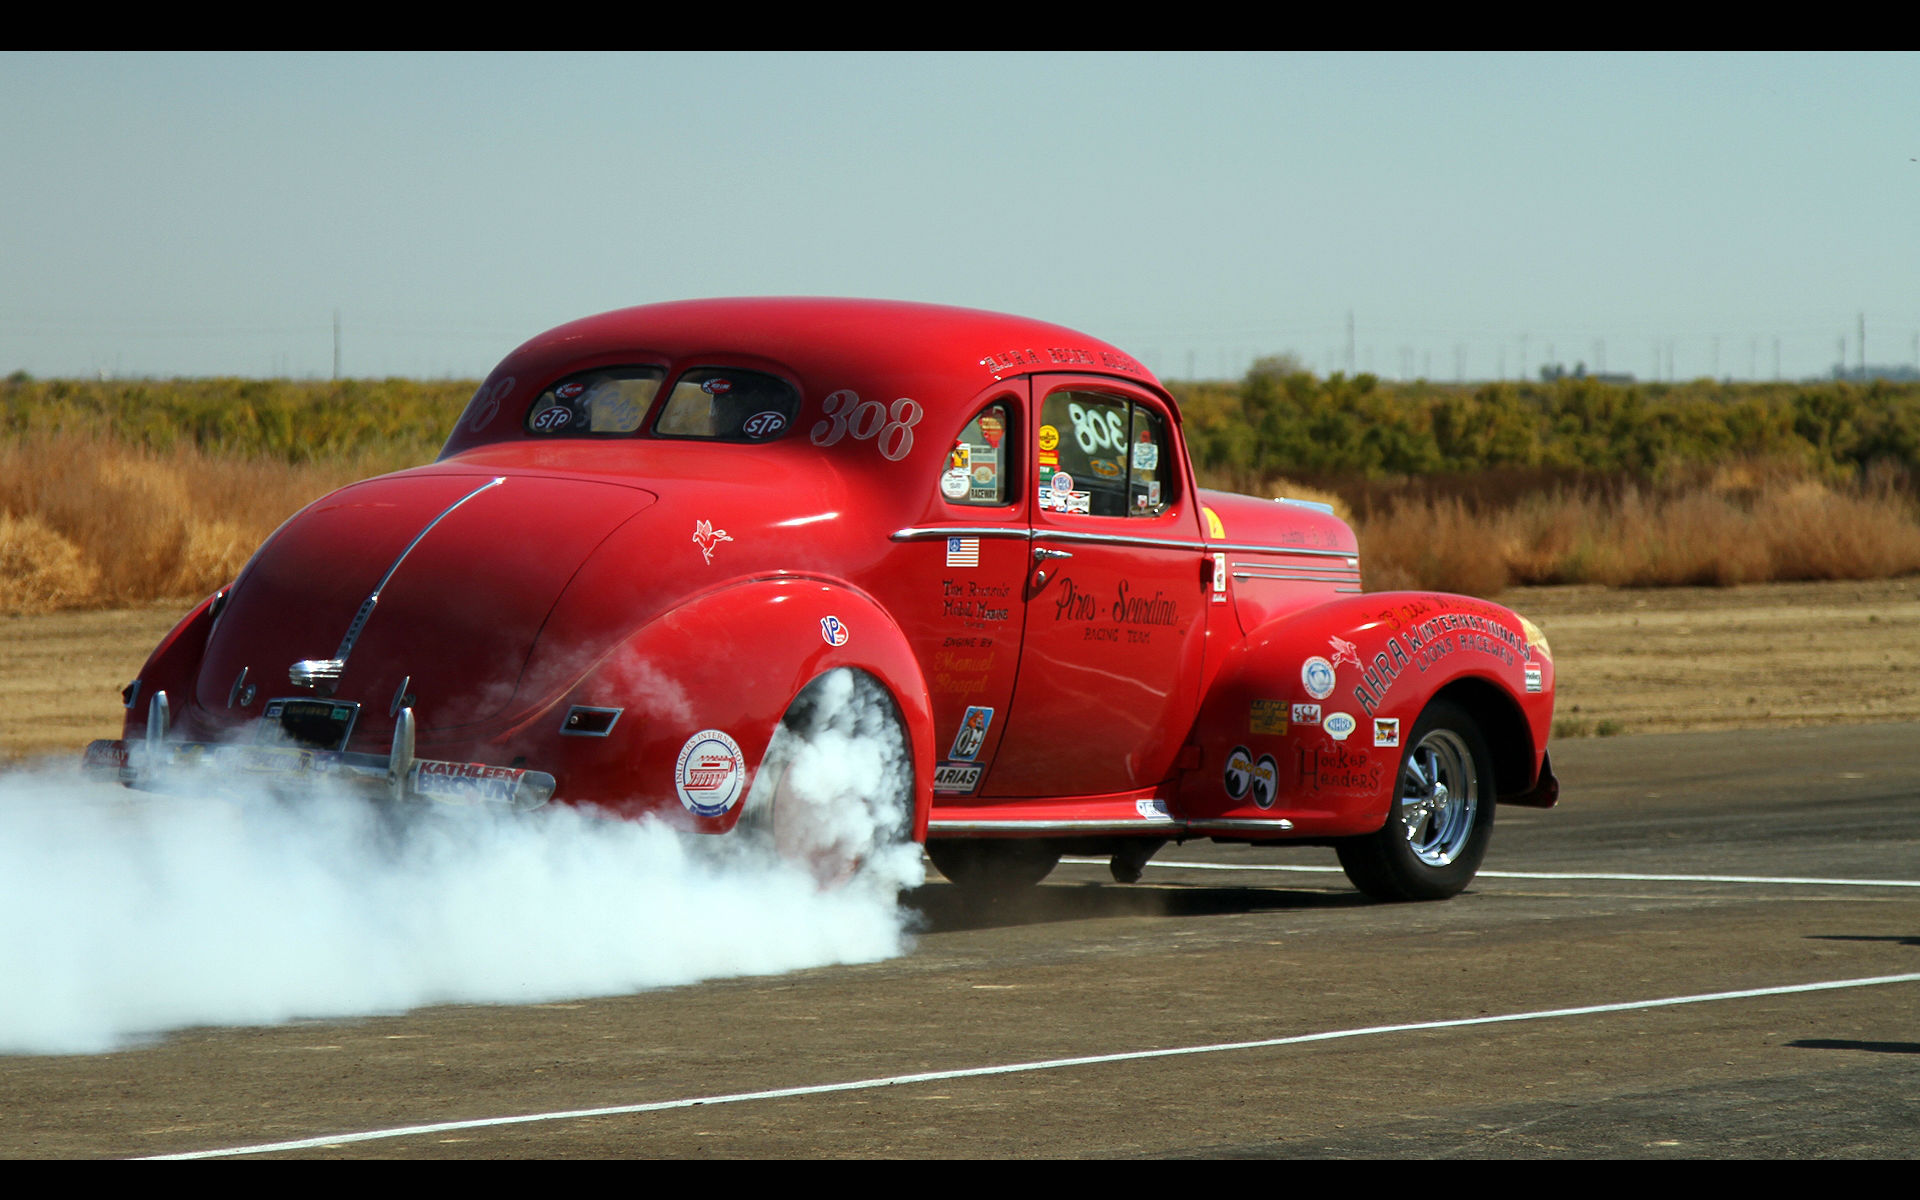 Racing Drag Race Cars Retro Red Burnout Smoke Wallpaper